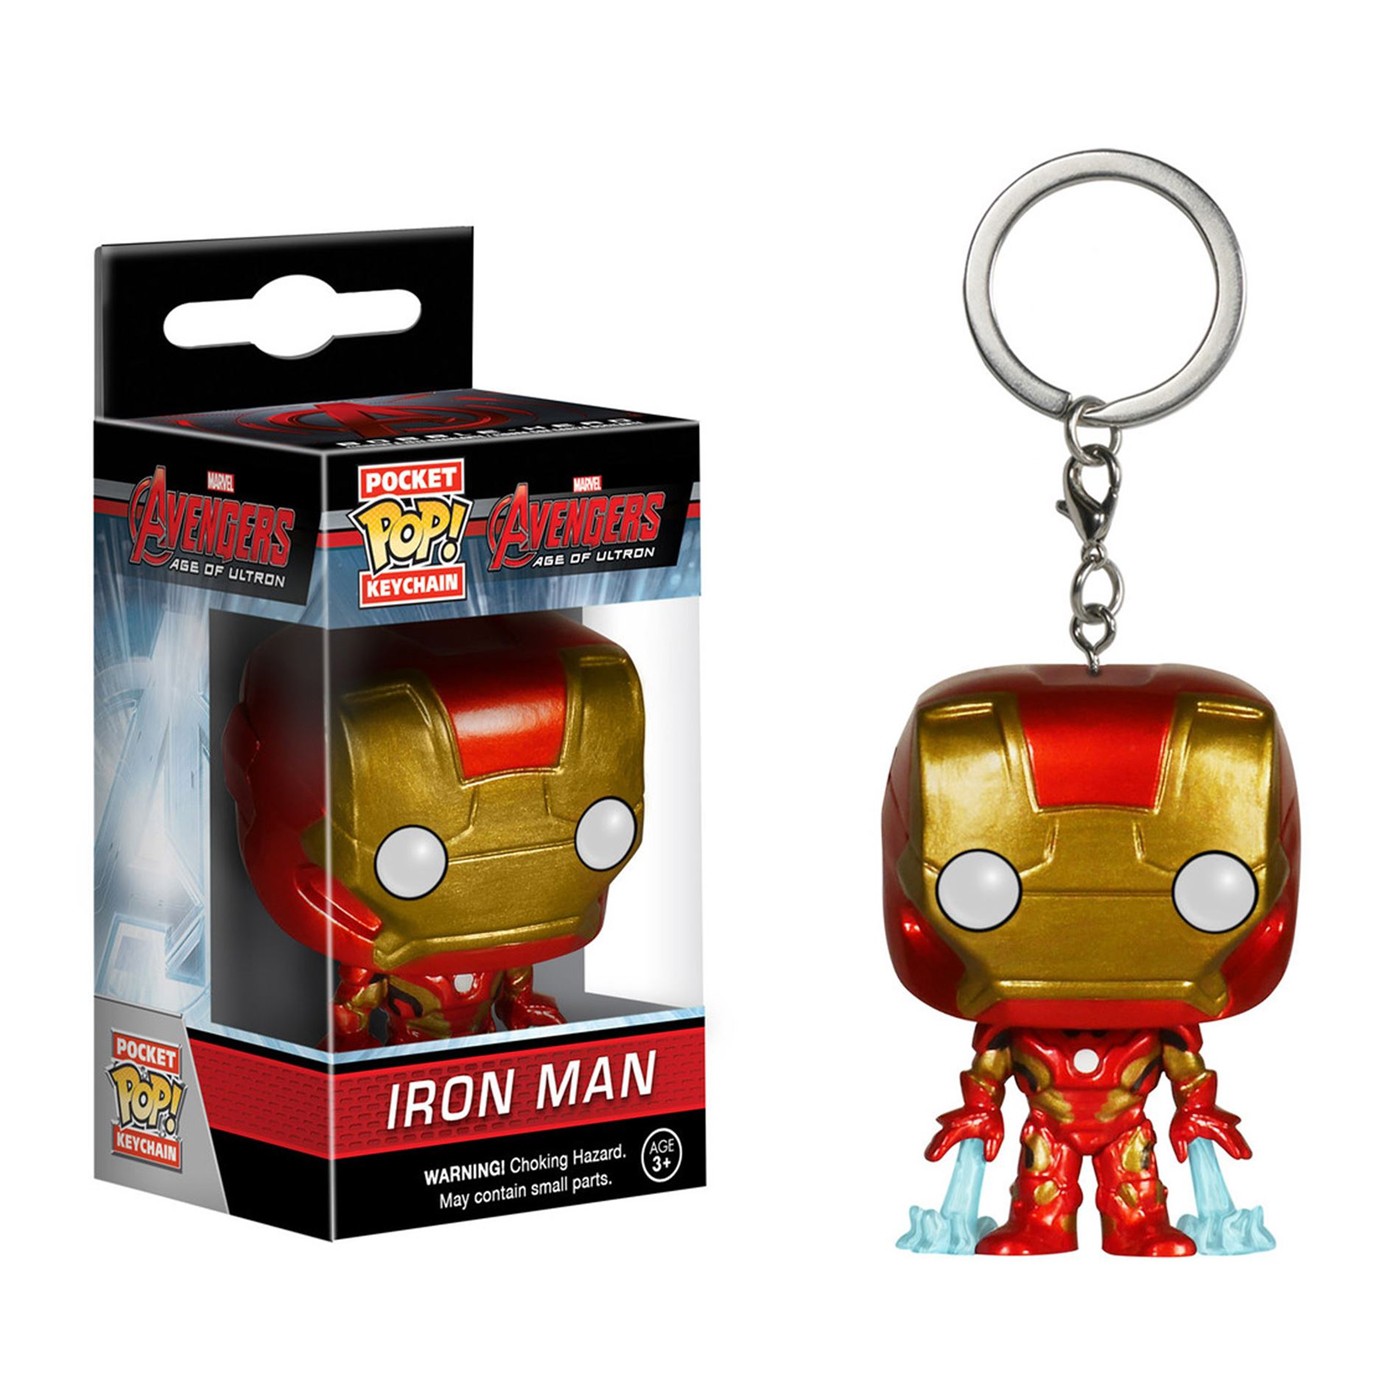 Iron Man Age of Ultron Pocket Pop Keychain